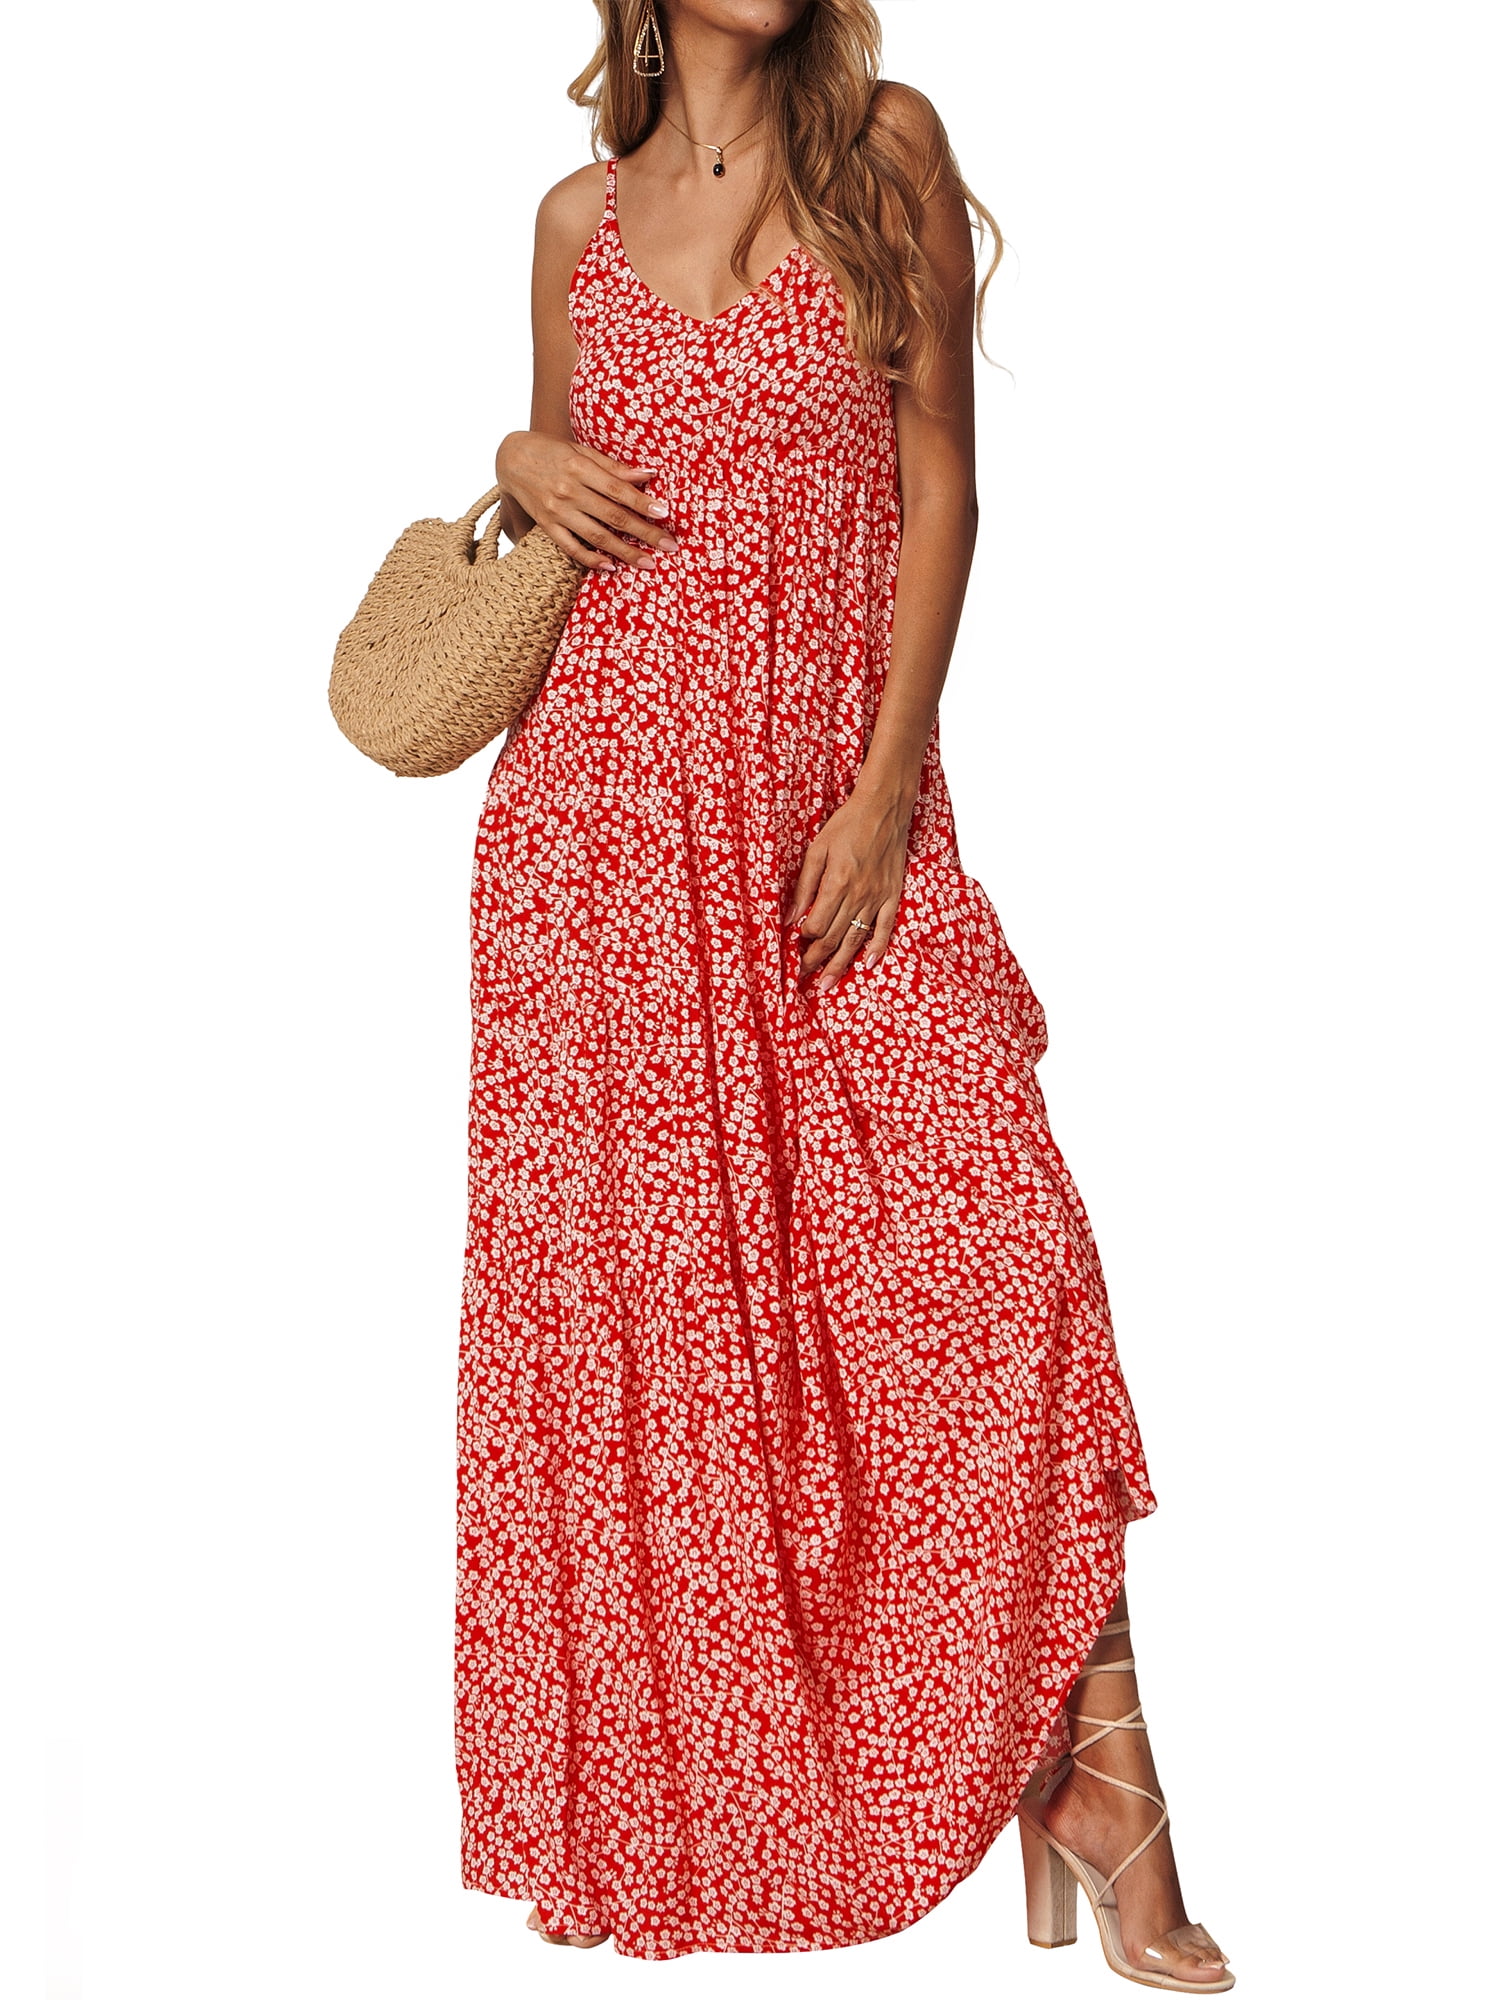 KYLEON Womens Dresses Casual Summer Beach Dress Bohemian Vintage Sleeveless Tie-dye Print Maxi Dress Boho Tunic Sun Dress